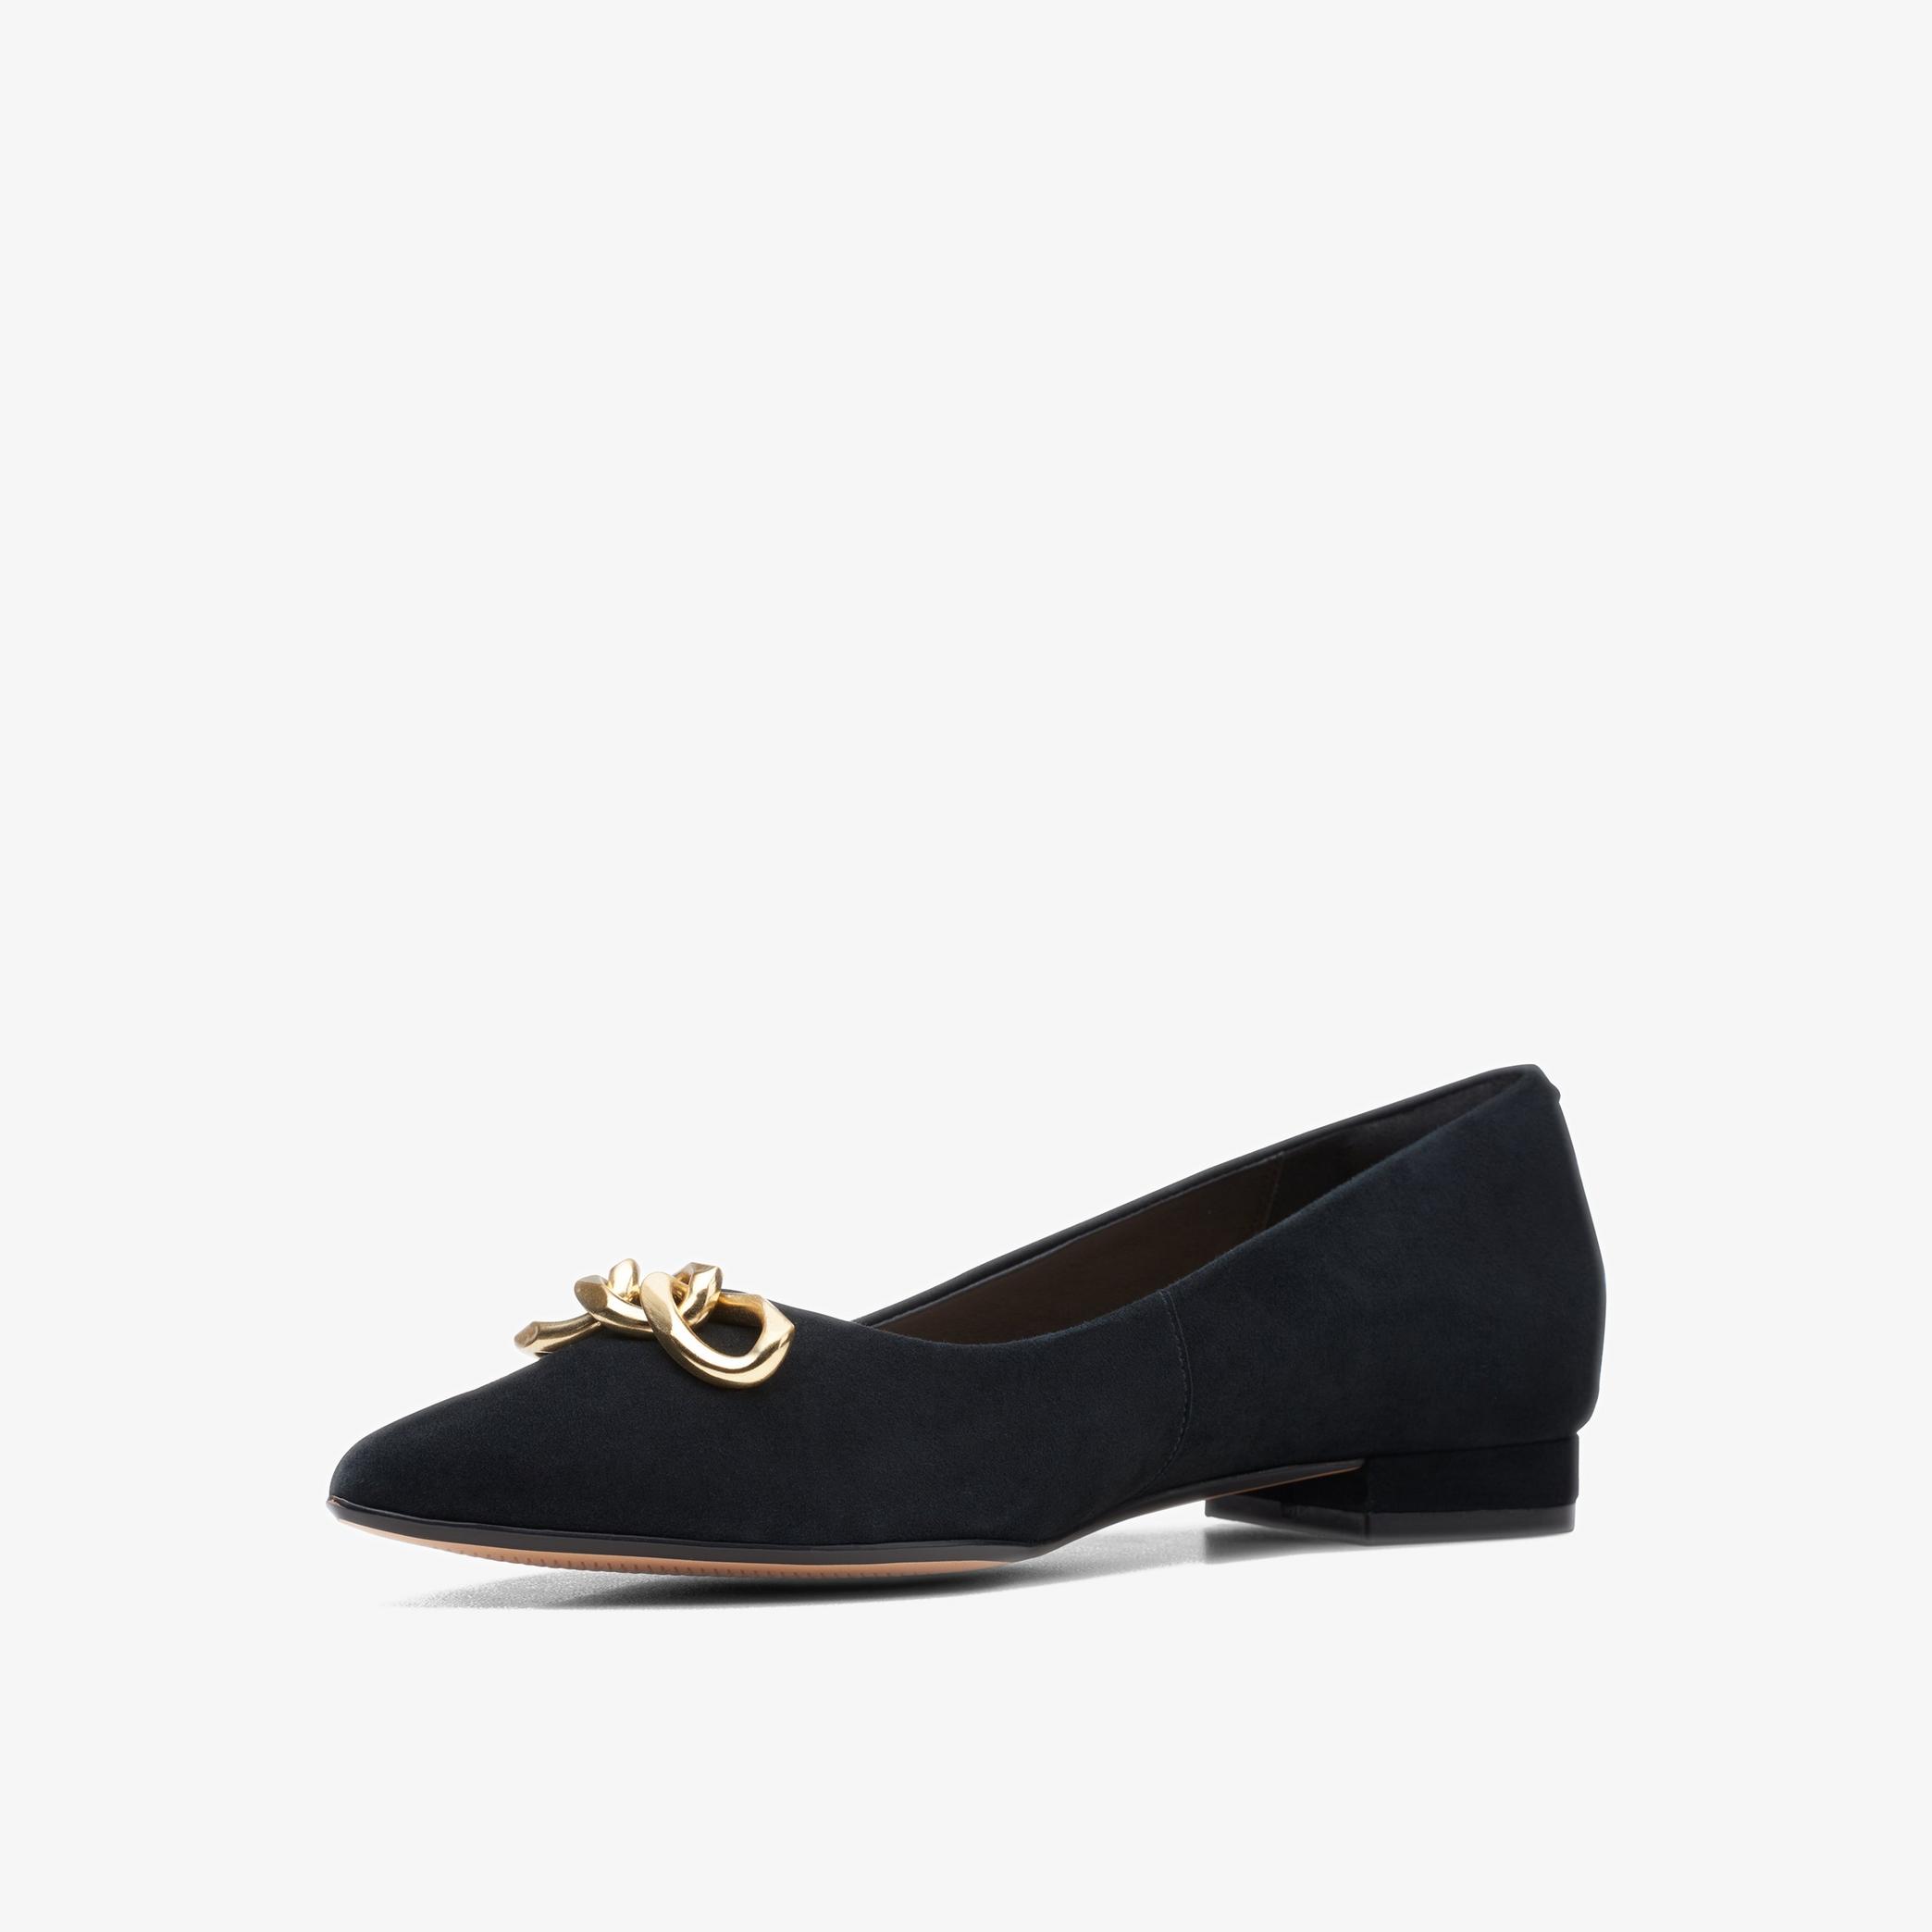 Laina15 Trim Black Suede Court Shoes, view 4 of 6